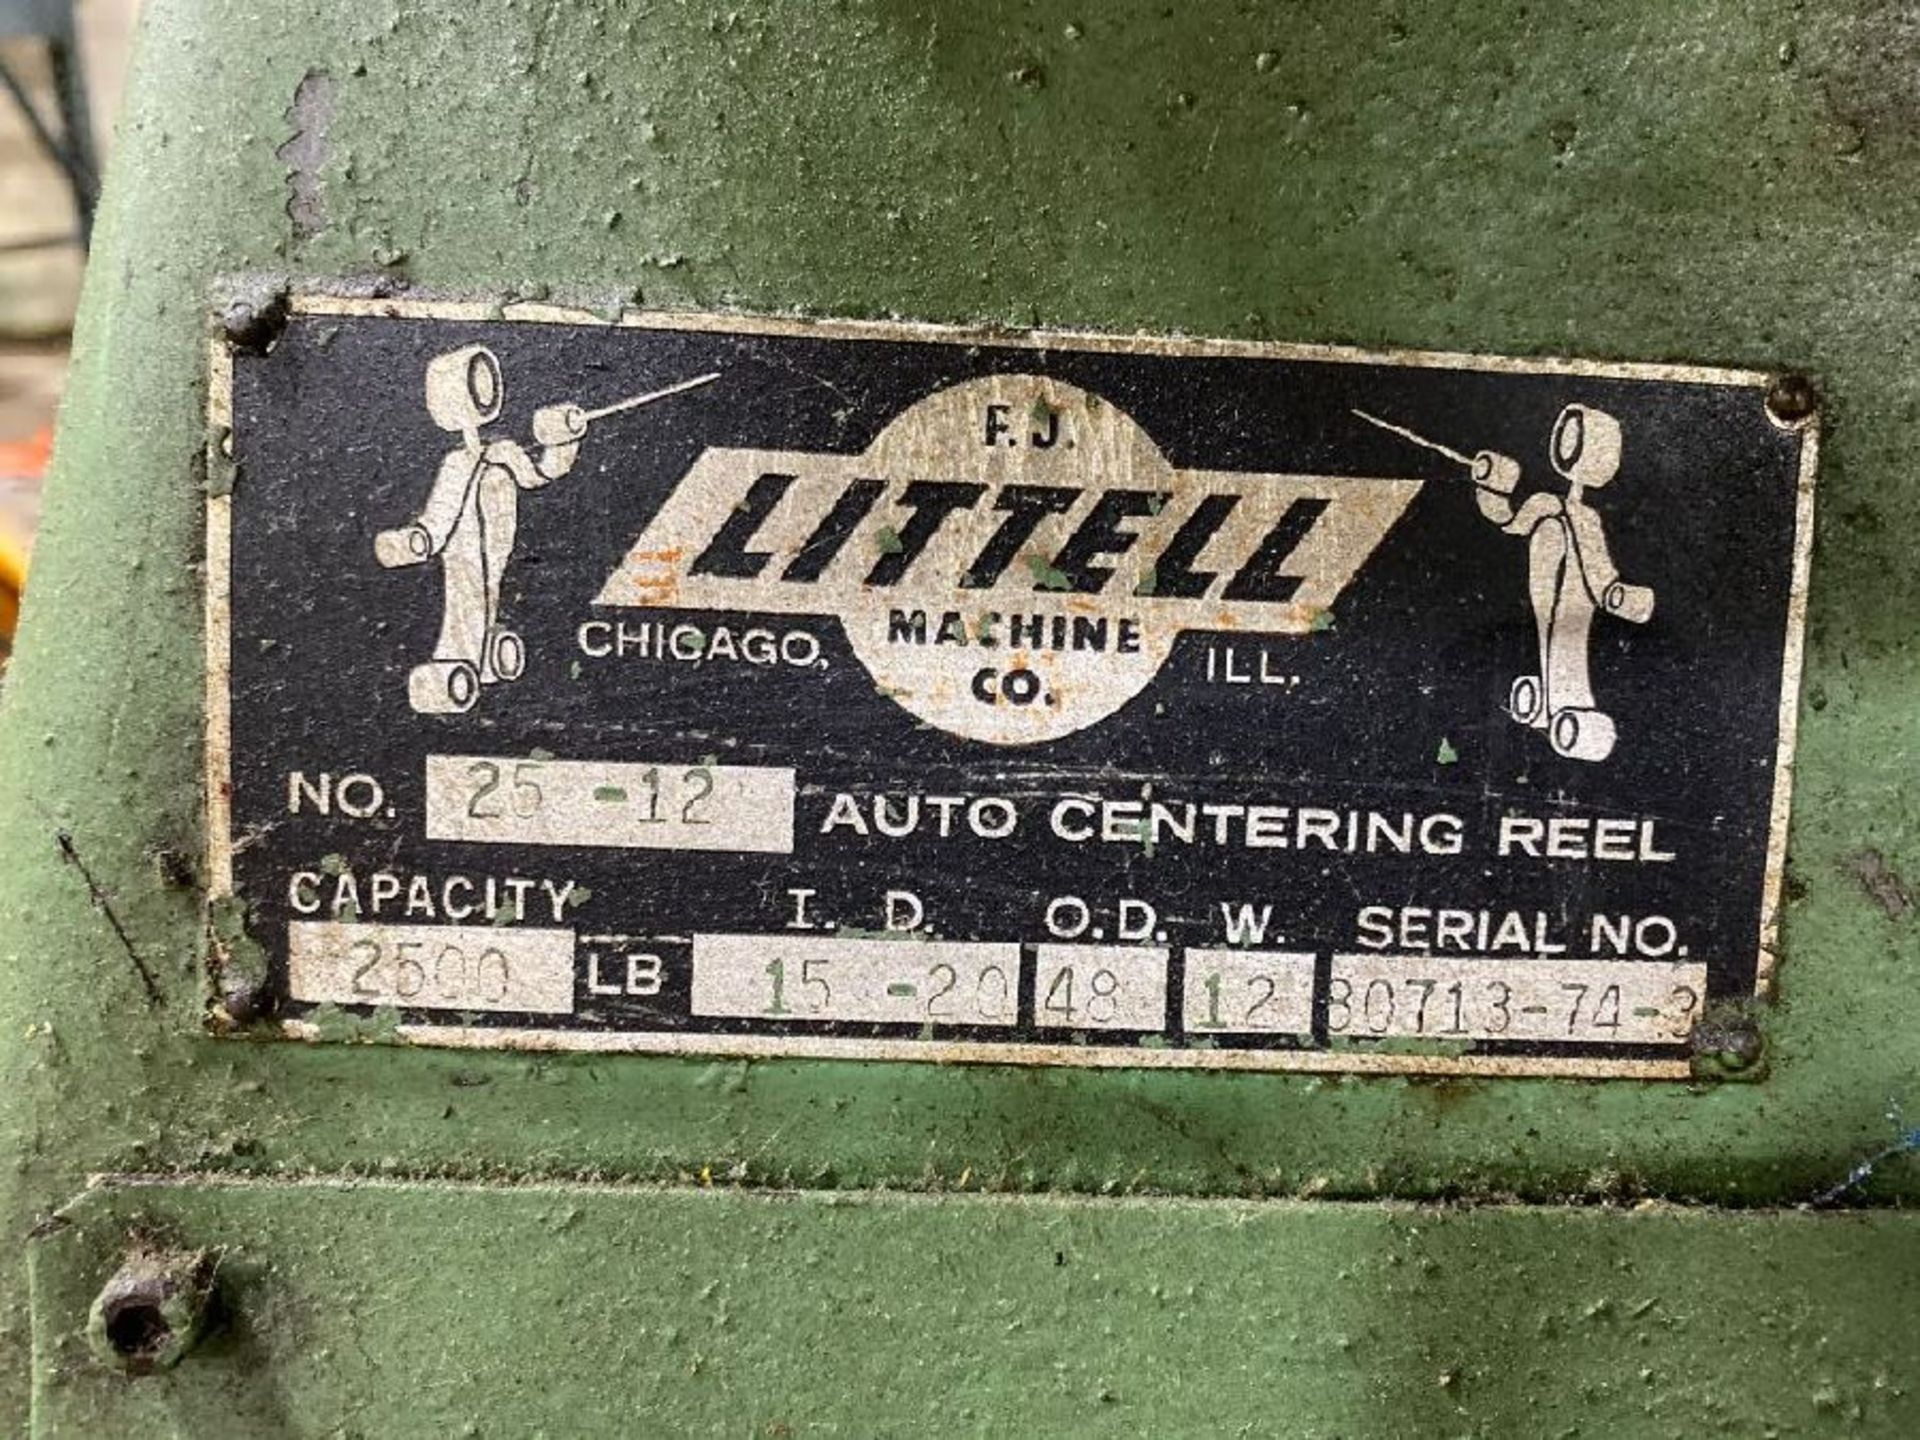 Littell Model 25-12 Auto Centering Reel - Image 4 of 4